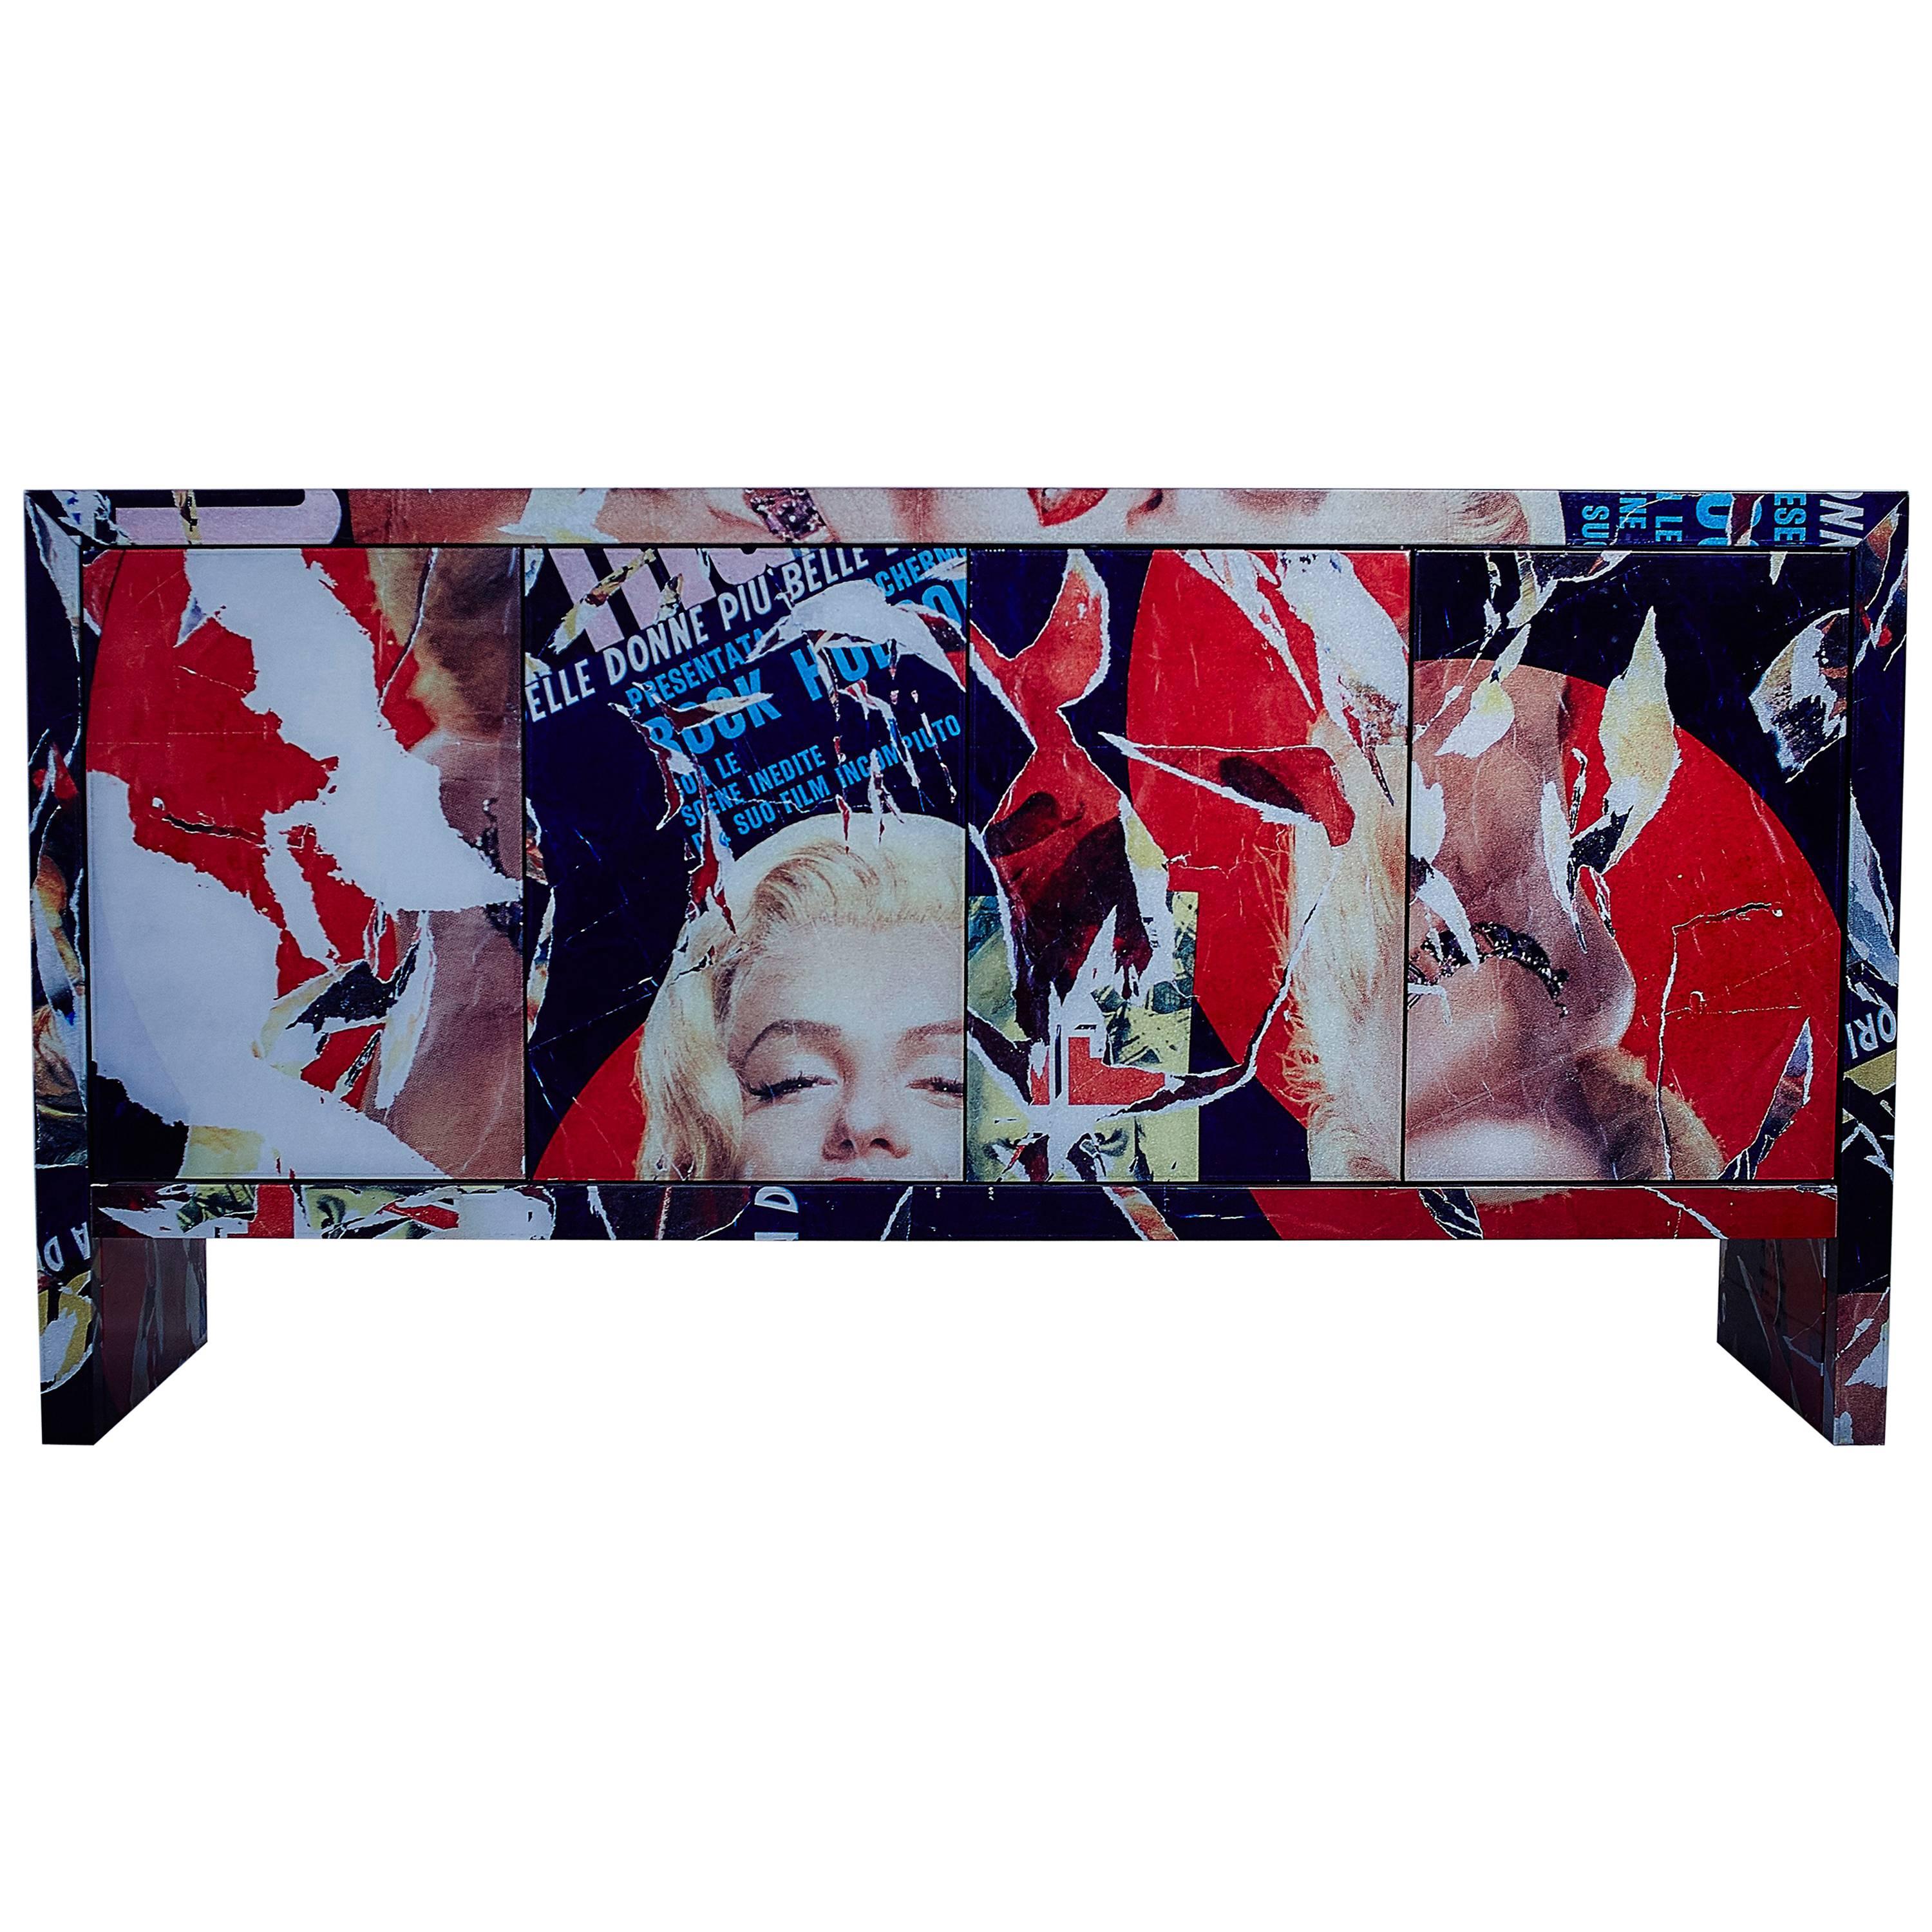 Mimmo Rotella "Marilyn, la donna più bella" Galvanized Sheet Metal Sideboard For Sale